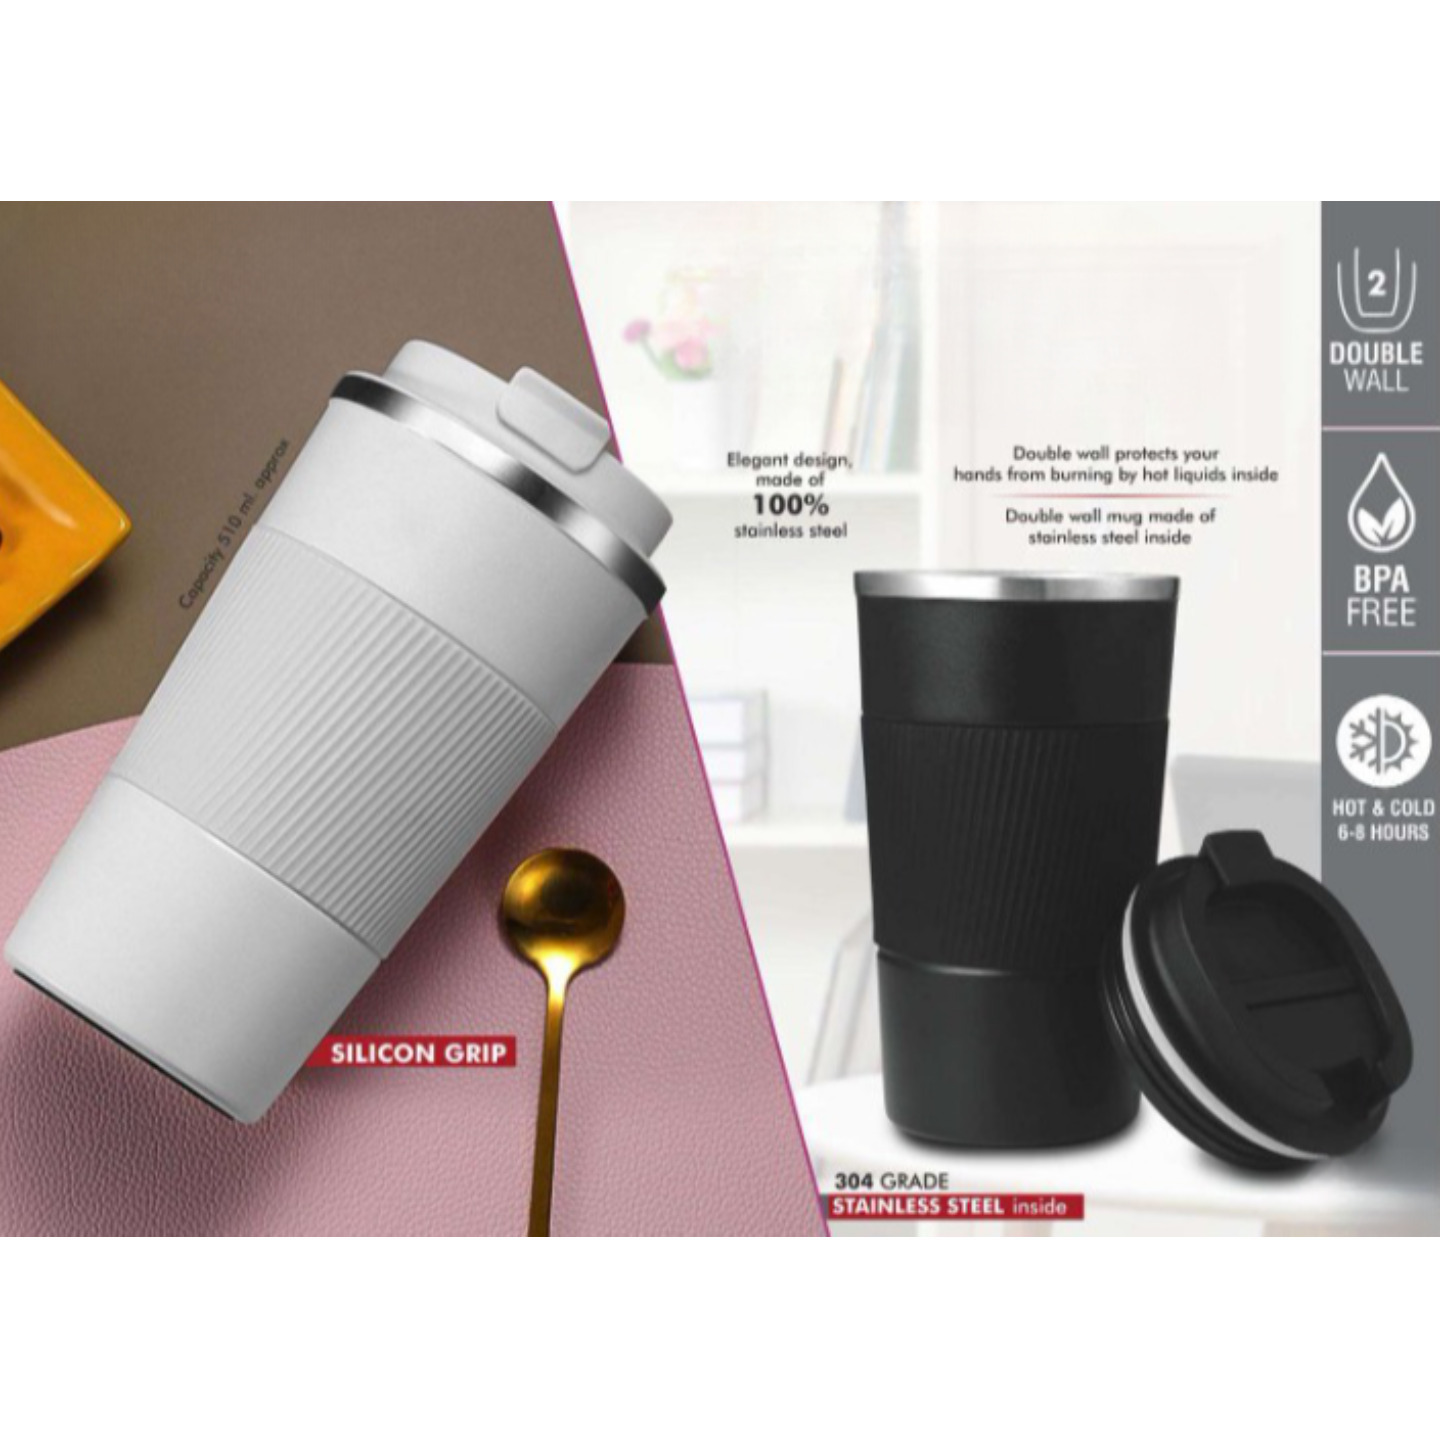 Vacuum coffee mug with Silicon Grip